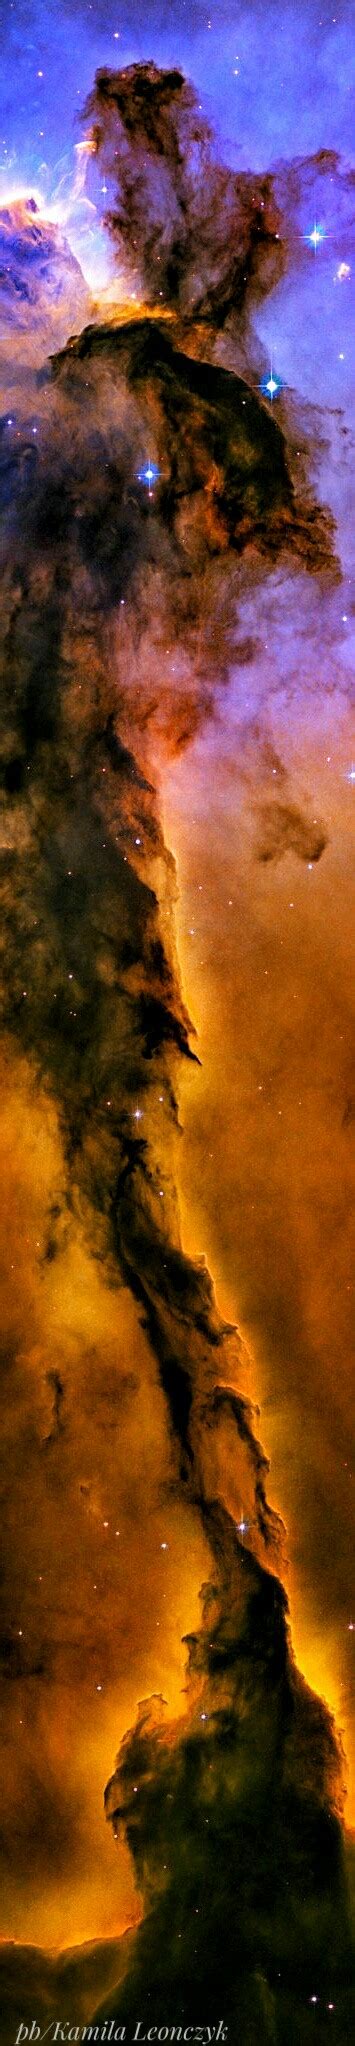 The Fairy Of Eagle Nebula The Greater Eagle Nebula M16 Is Actually